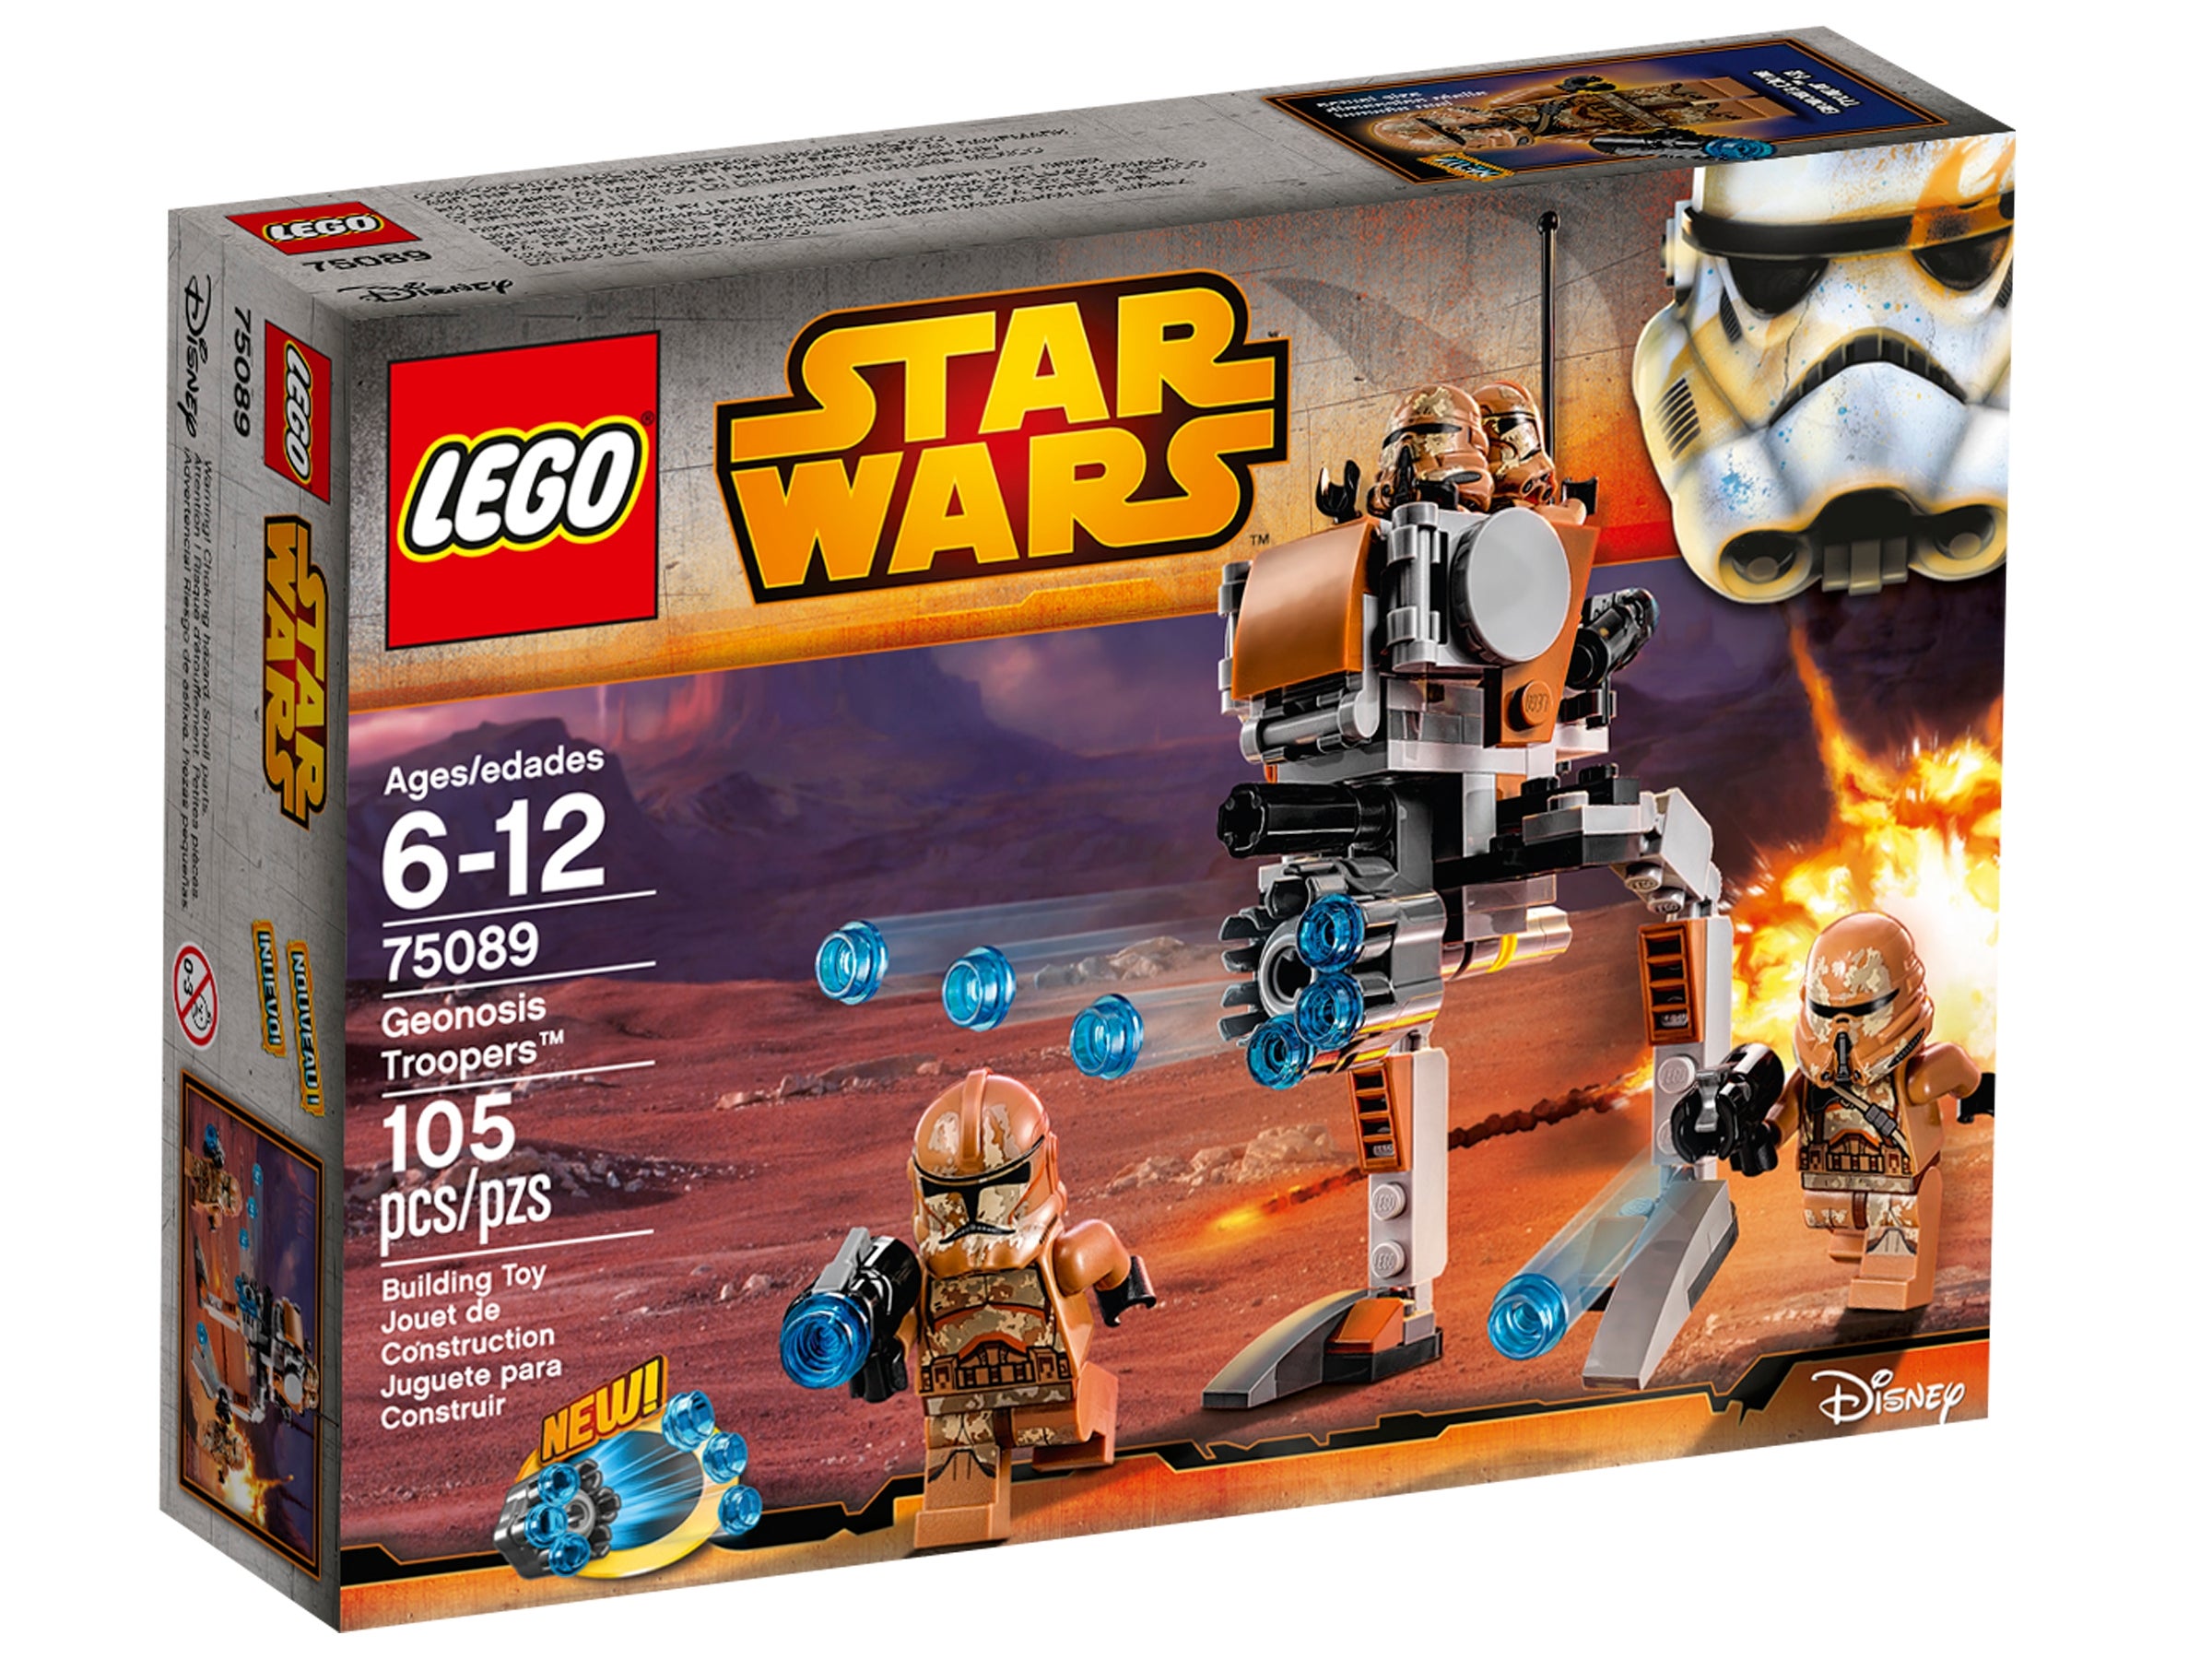 LEGO Star Wars Minifigur Geonosis Clone Trooper sw0606 aus 75089 